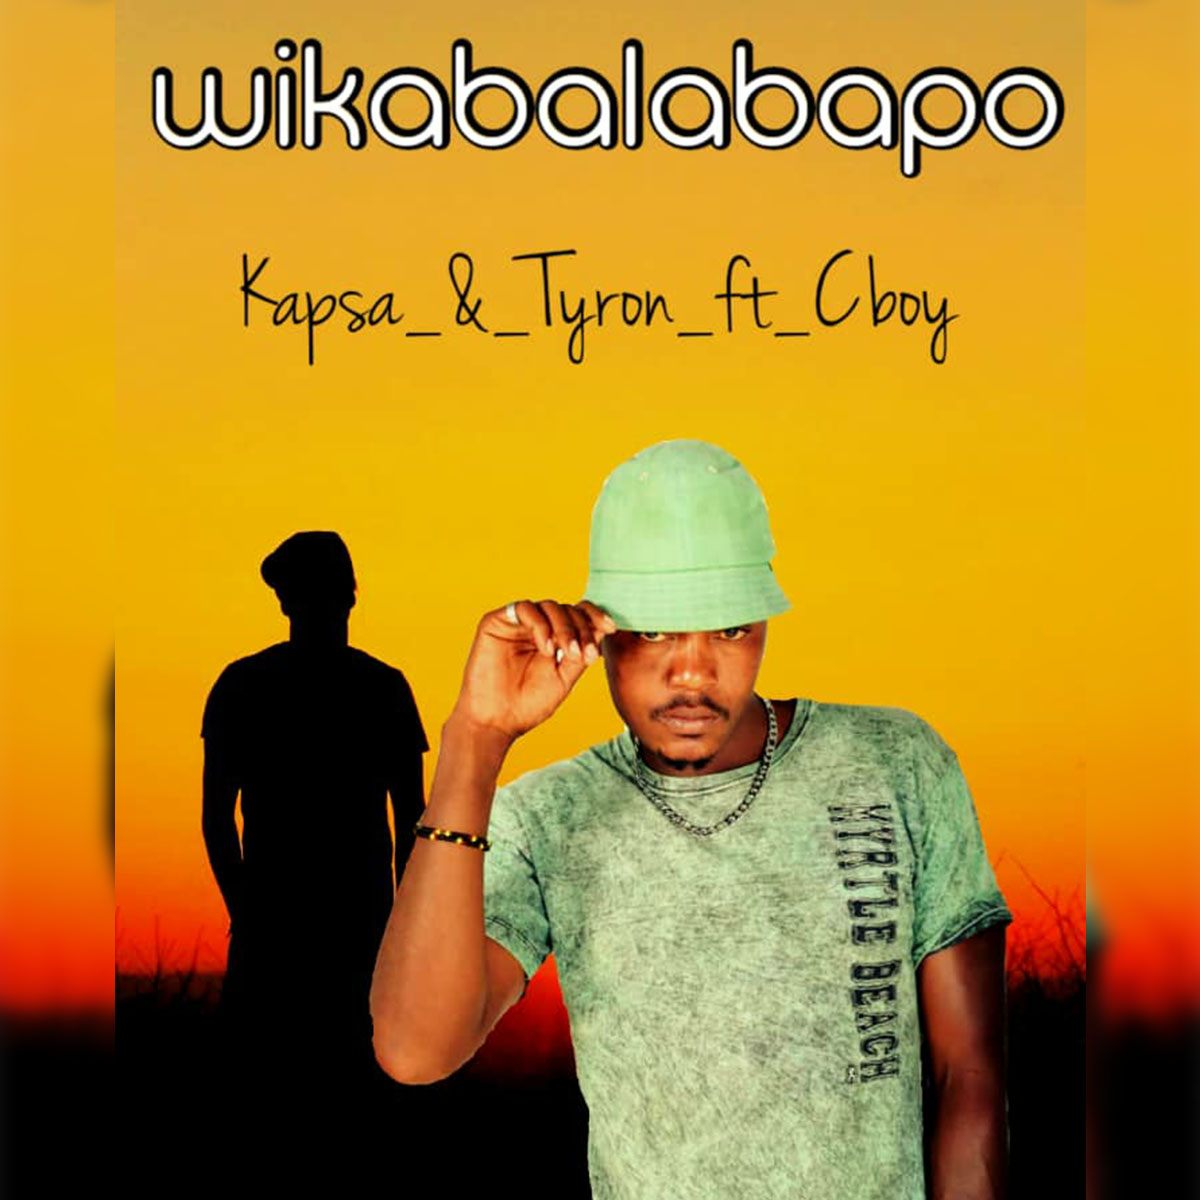 Kapsa & Tyron ft. Cboy - Wikabalabapo